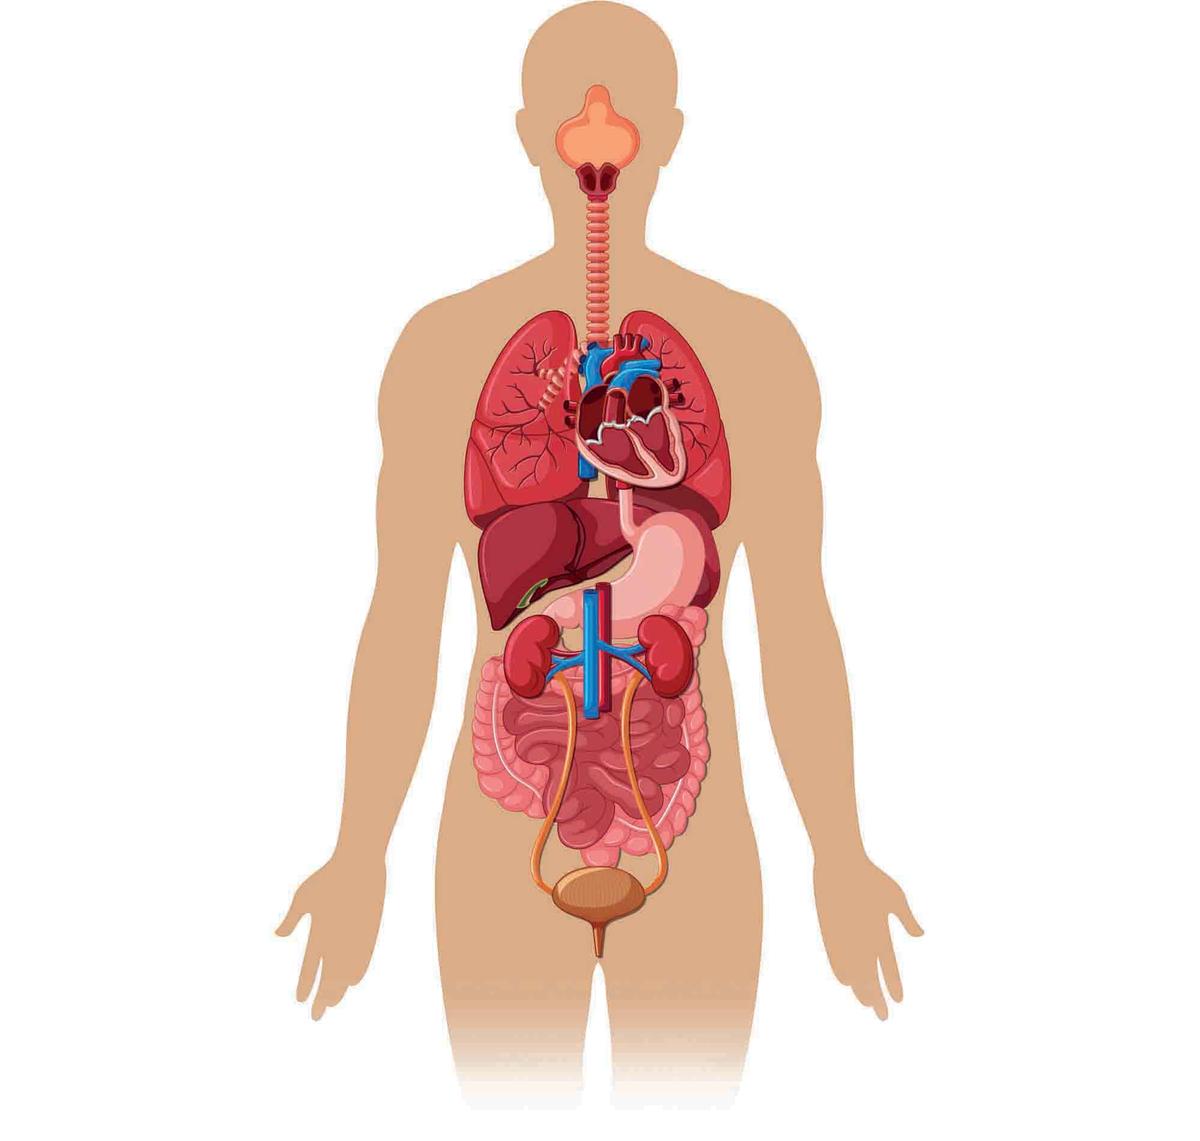 Illustration - Shutterstock | <a href="https://www.shutterstock.com/image-vector/human-body-different-organs-illustration-478957342">GraphicsRF</a>